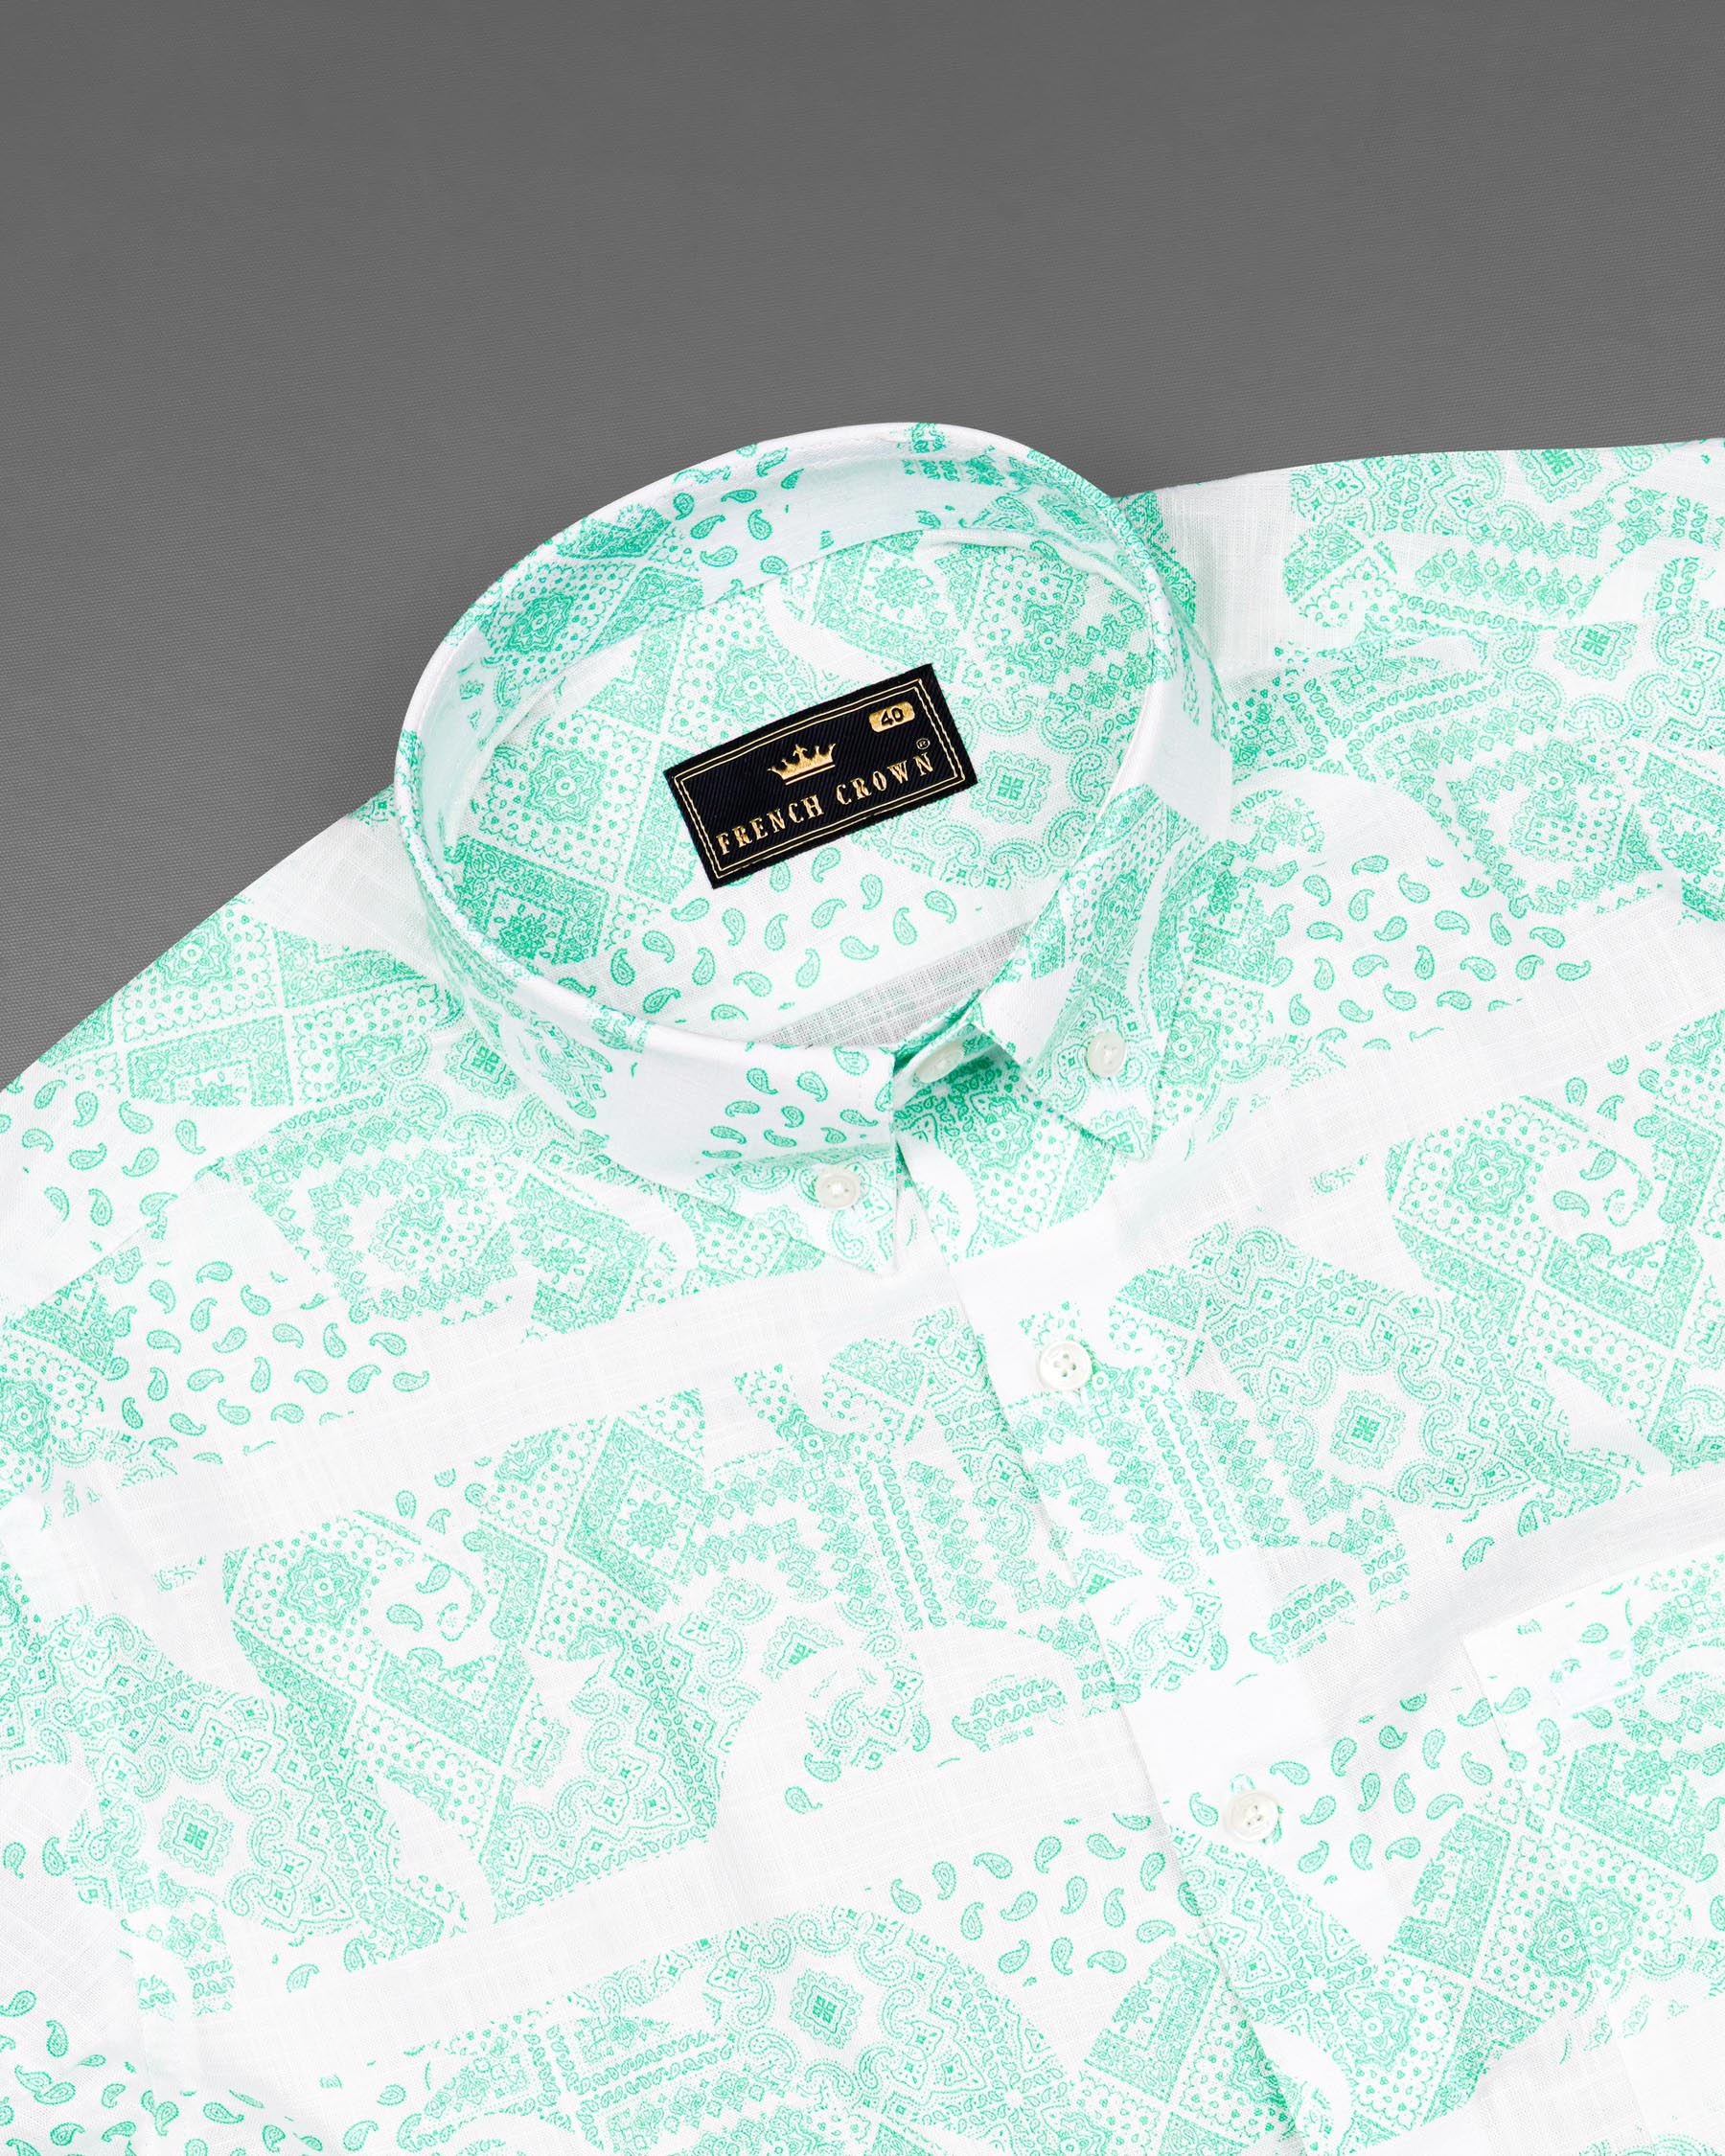 Riptide Quirky Designed Luxurious Linen Shirt